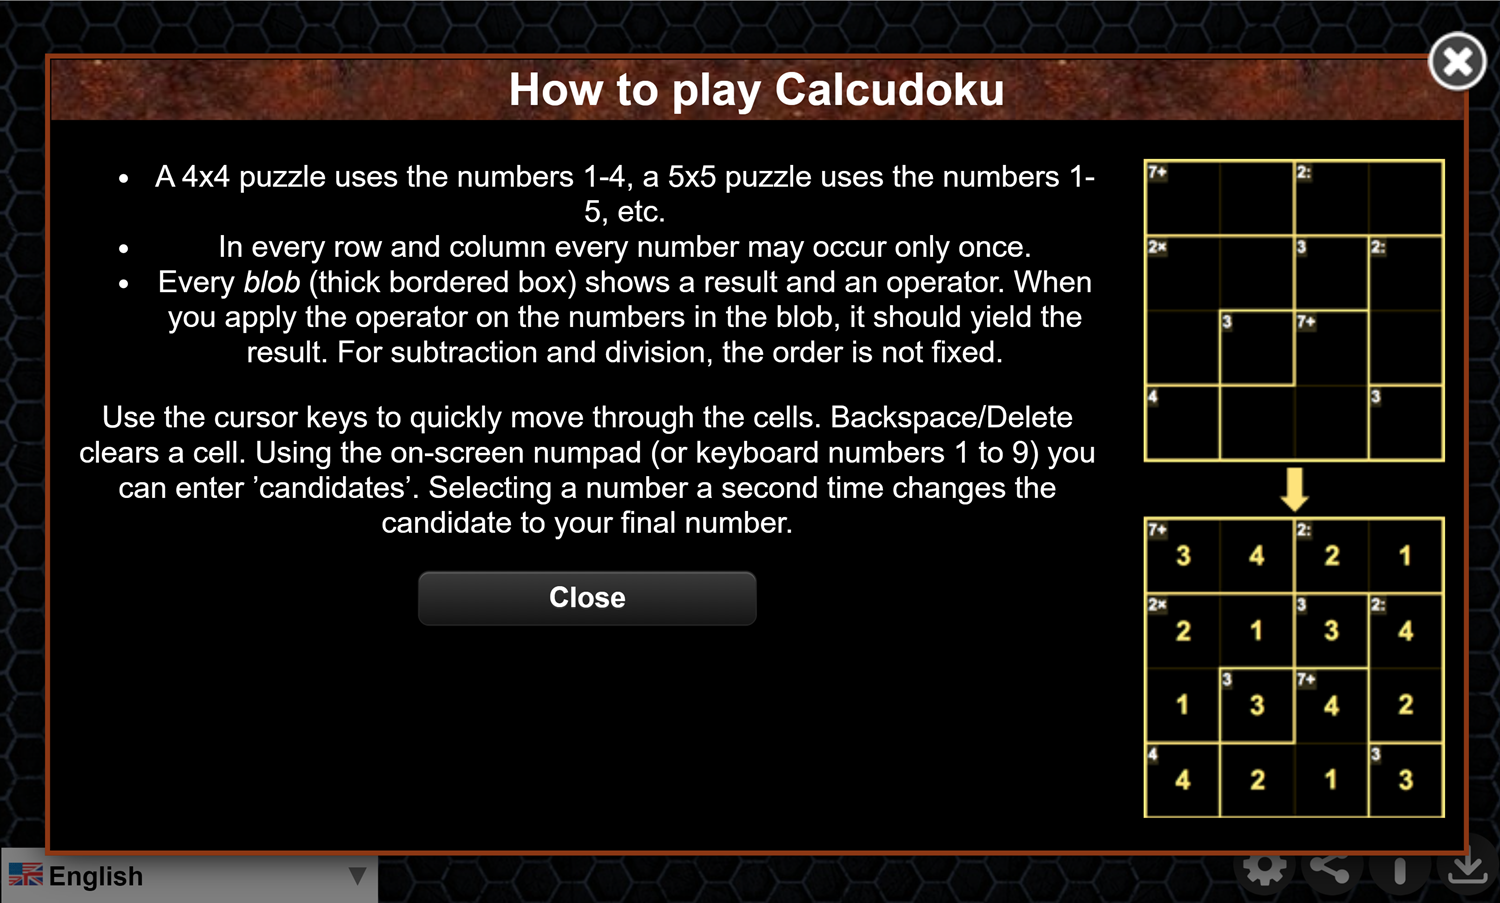 Daily Calcudoku Game How to Play Screen Screenshot.